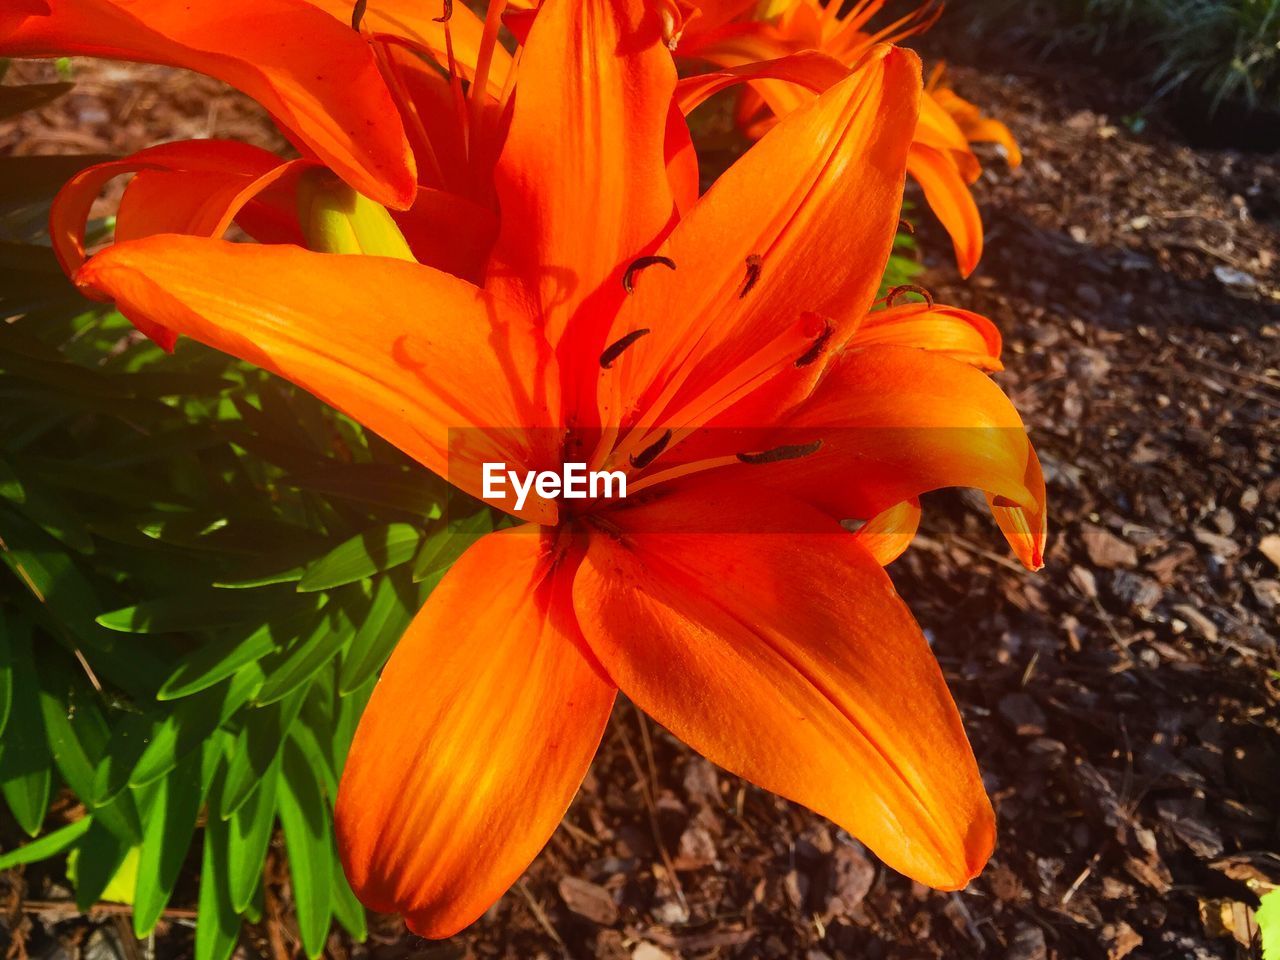 Close-up of fresh orange flower in bloom